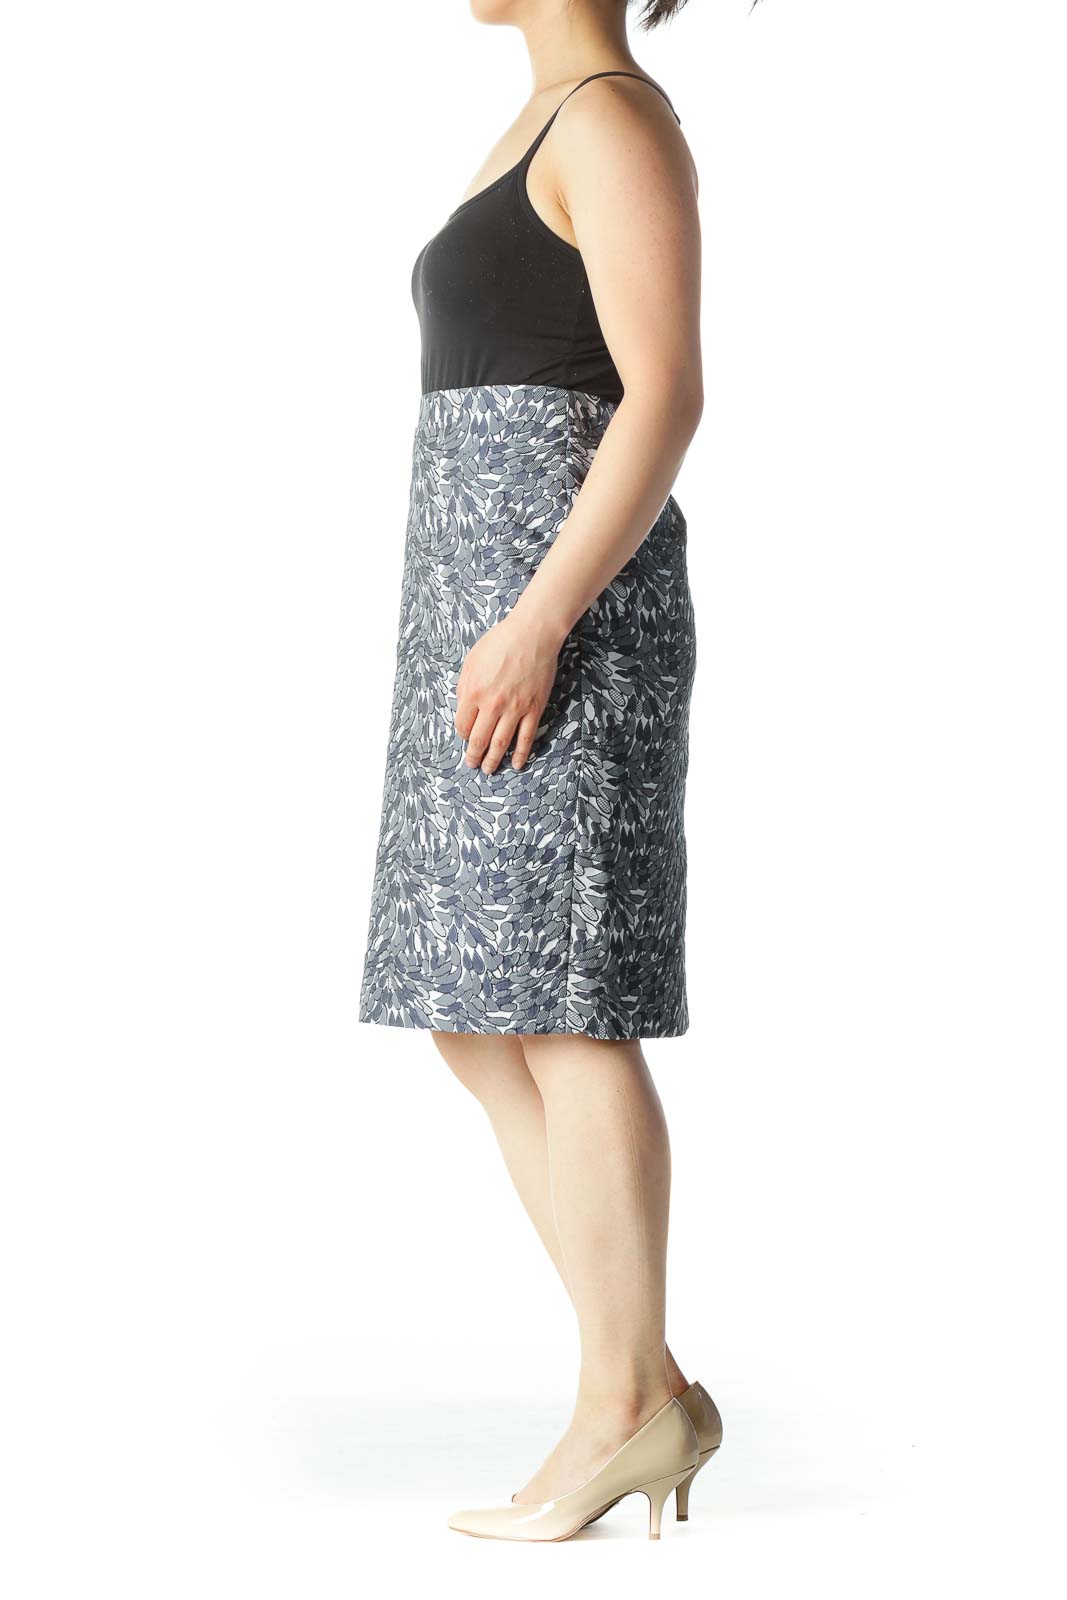 Ann Taylor - Navy & White Jacquard Leaf-Print Pencil Skirt